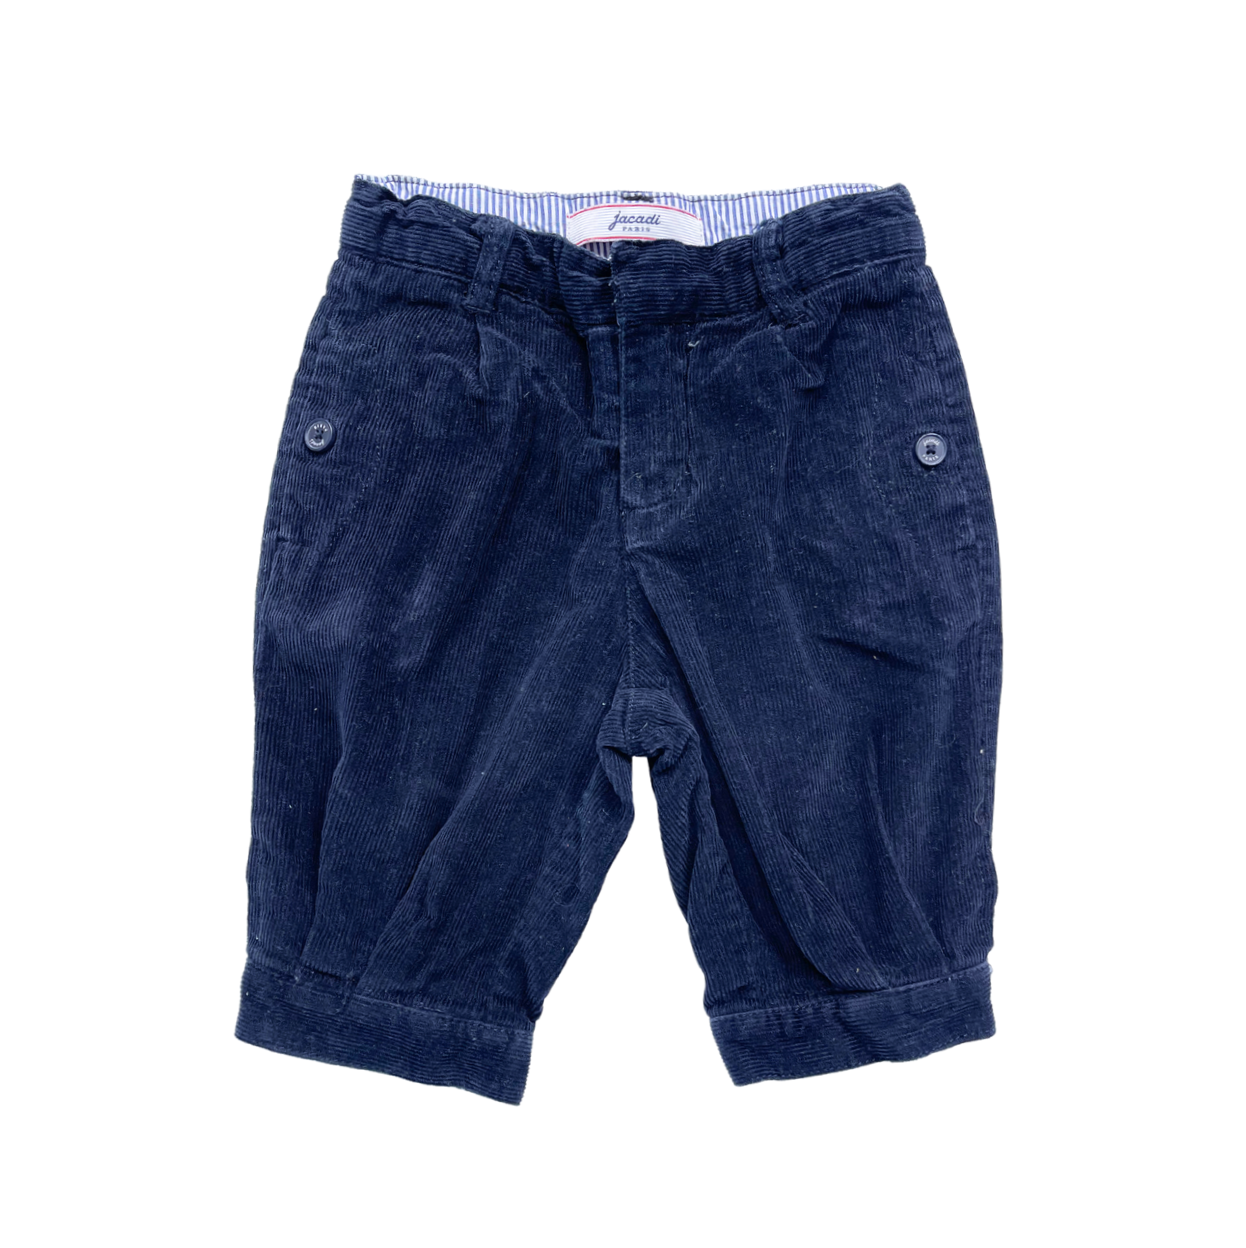 JACADI - Pantalon en velours bleu marine - 18 mois